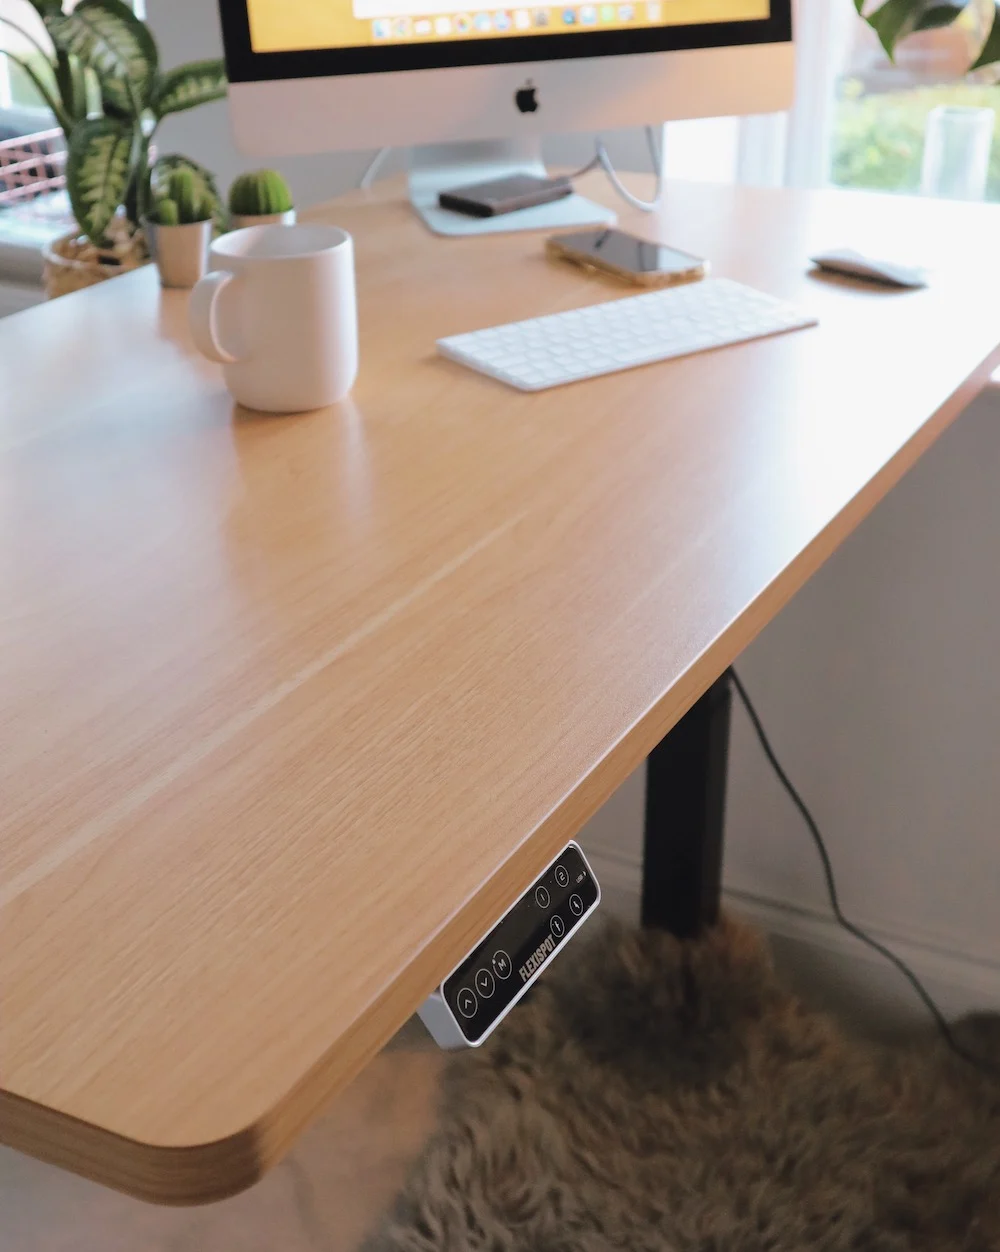 Flexispot Pro Plus Standing Desk E7 review: Is it worth it? - Dexerto